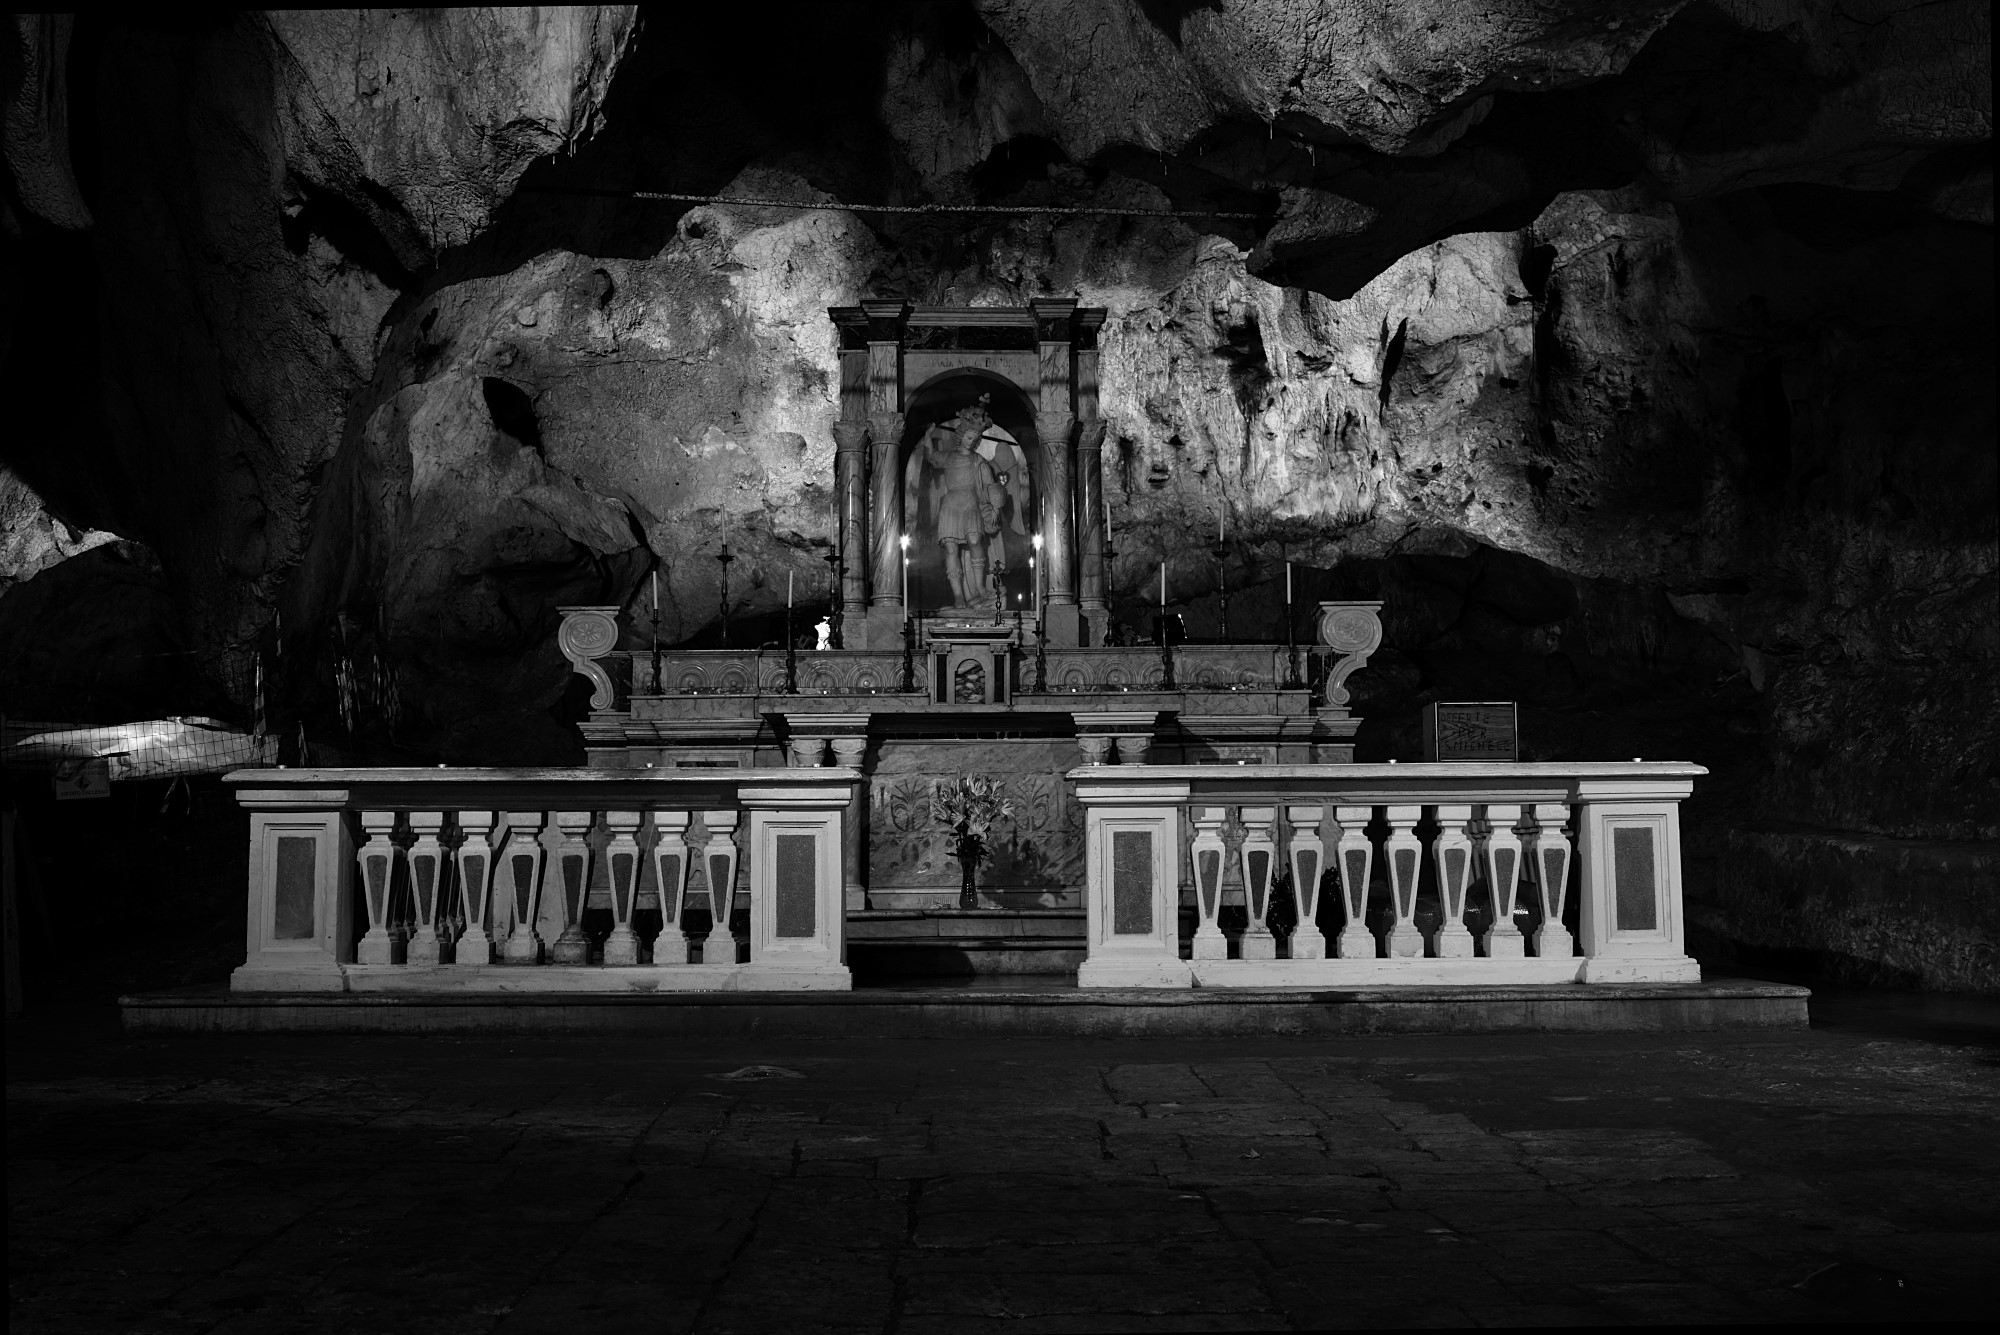 Grotta S.Michele (Cagnano Varano) entrance...